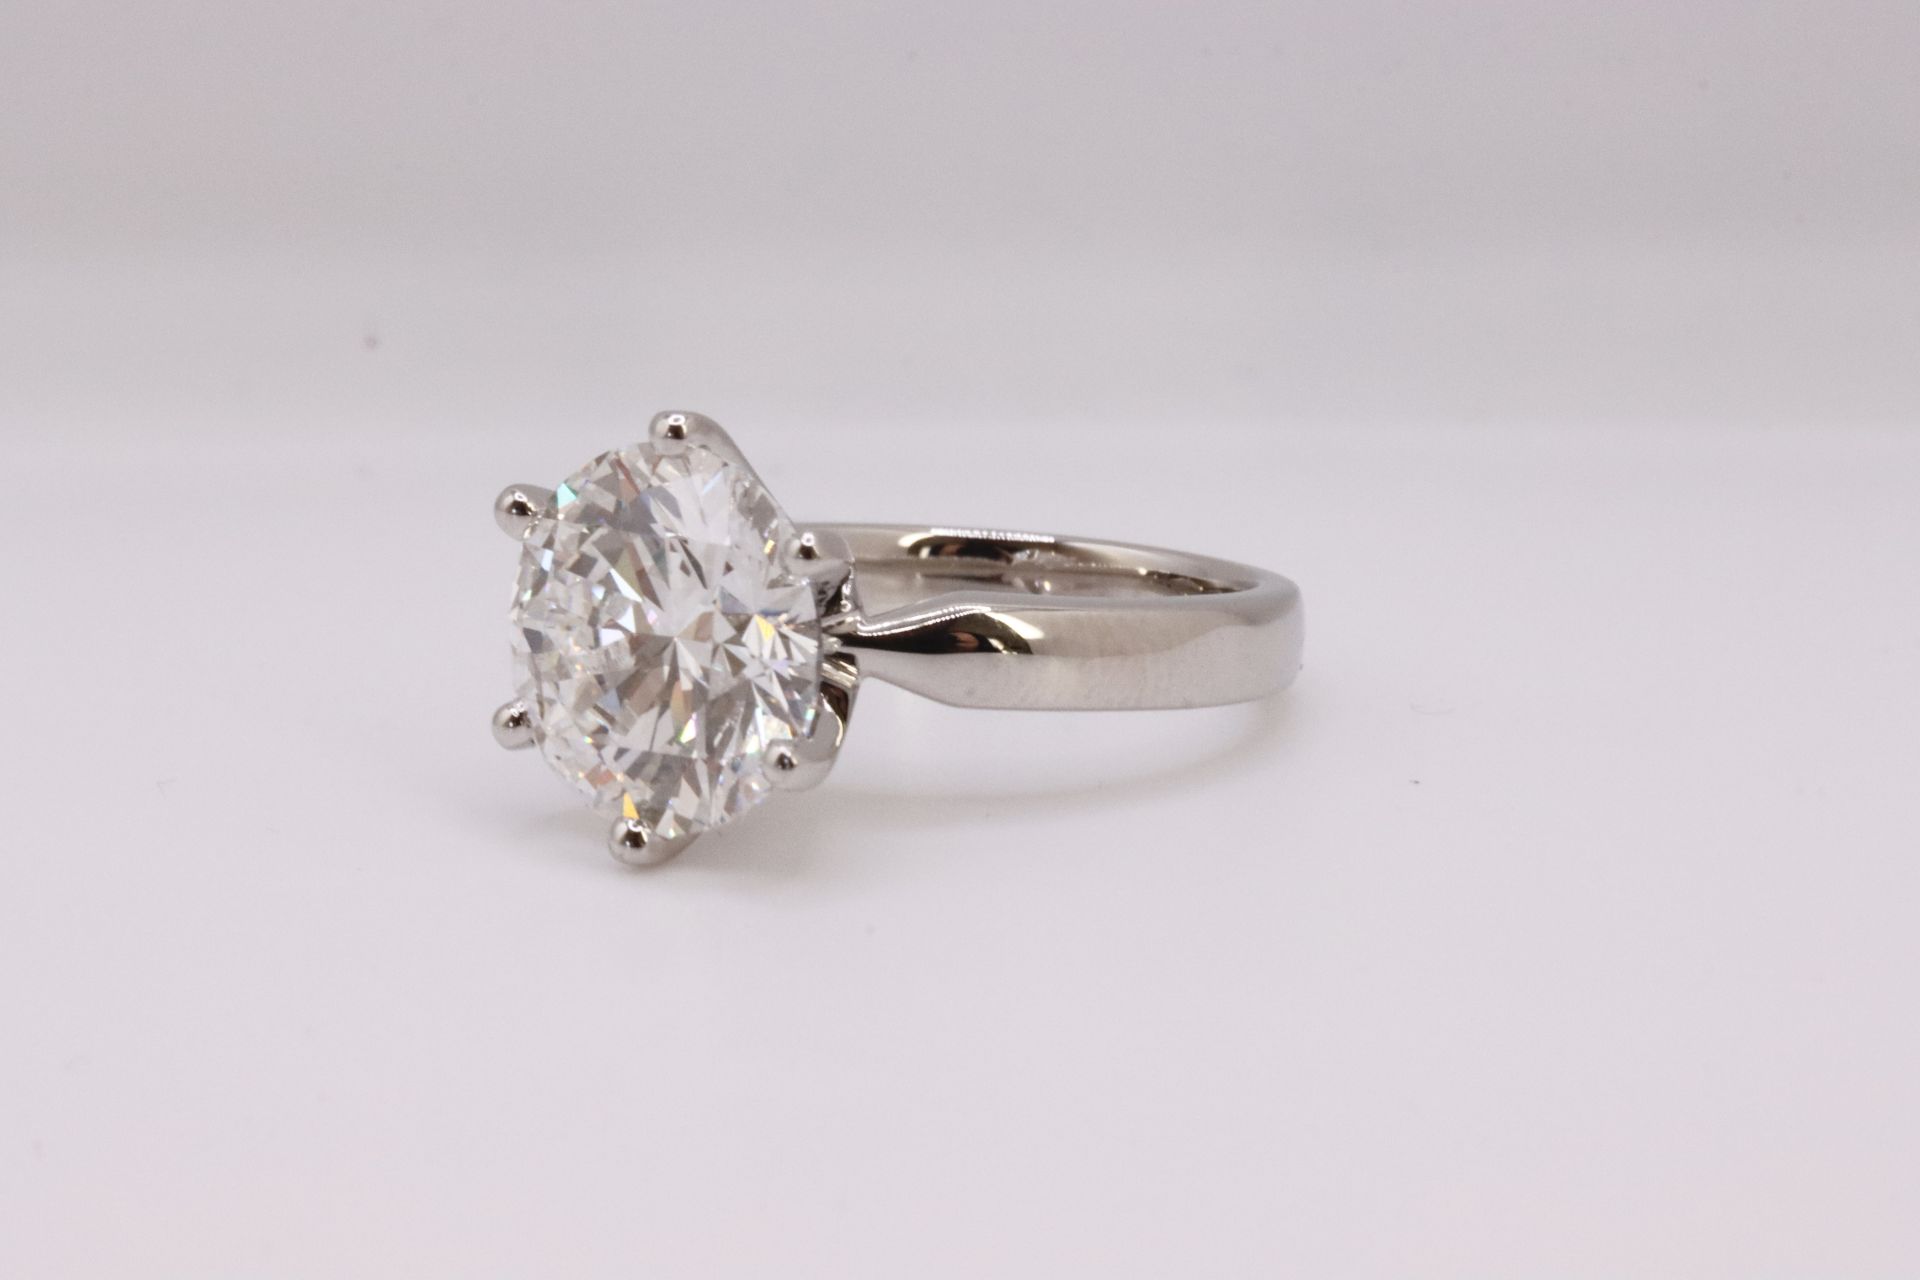 ** ON SALE ** Round Brilliant Cut Diamond Platinum Ring 5.00 Carat F Colour VS2 Clarity IDEAL - Image 7 of 8